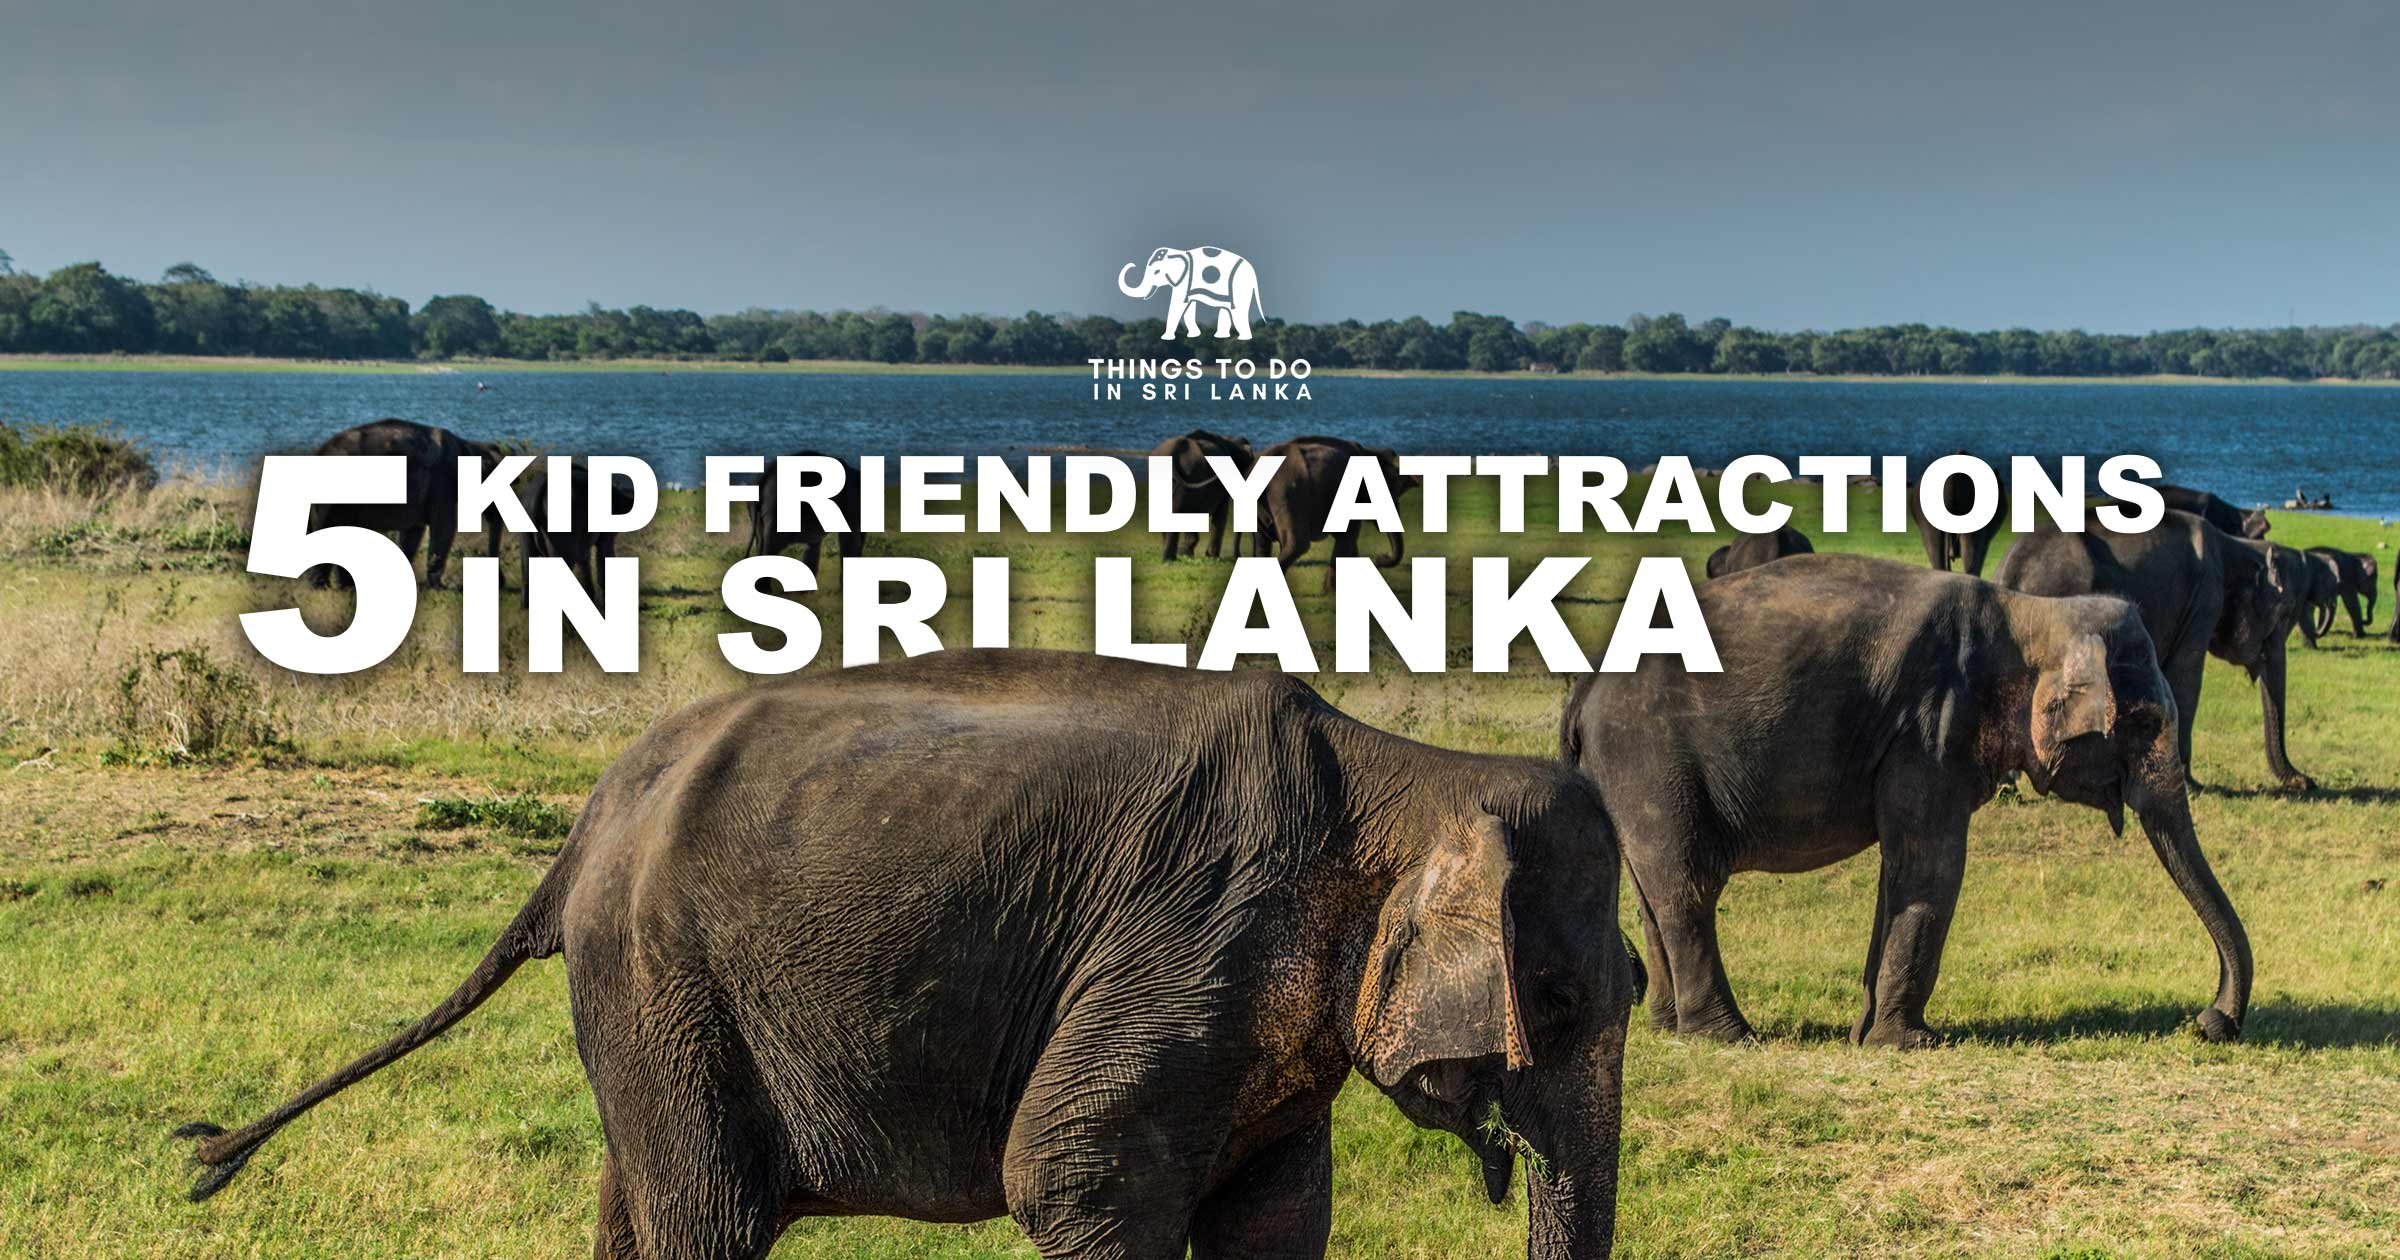 5 Kid Friendly Attractions In Sri Lanka